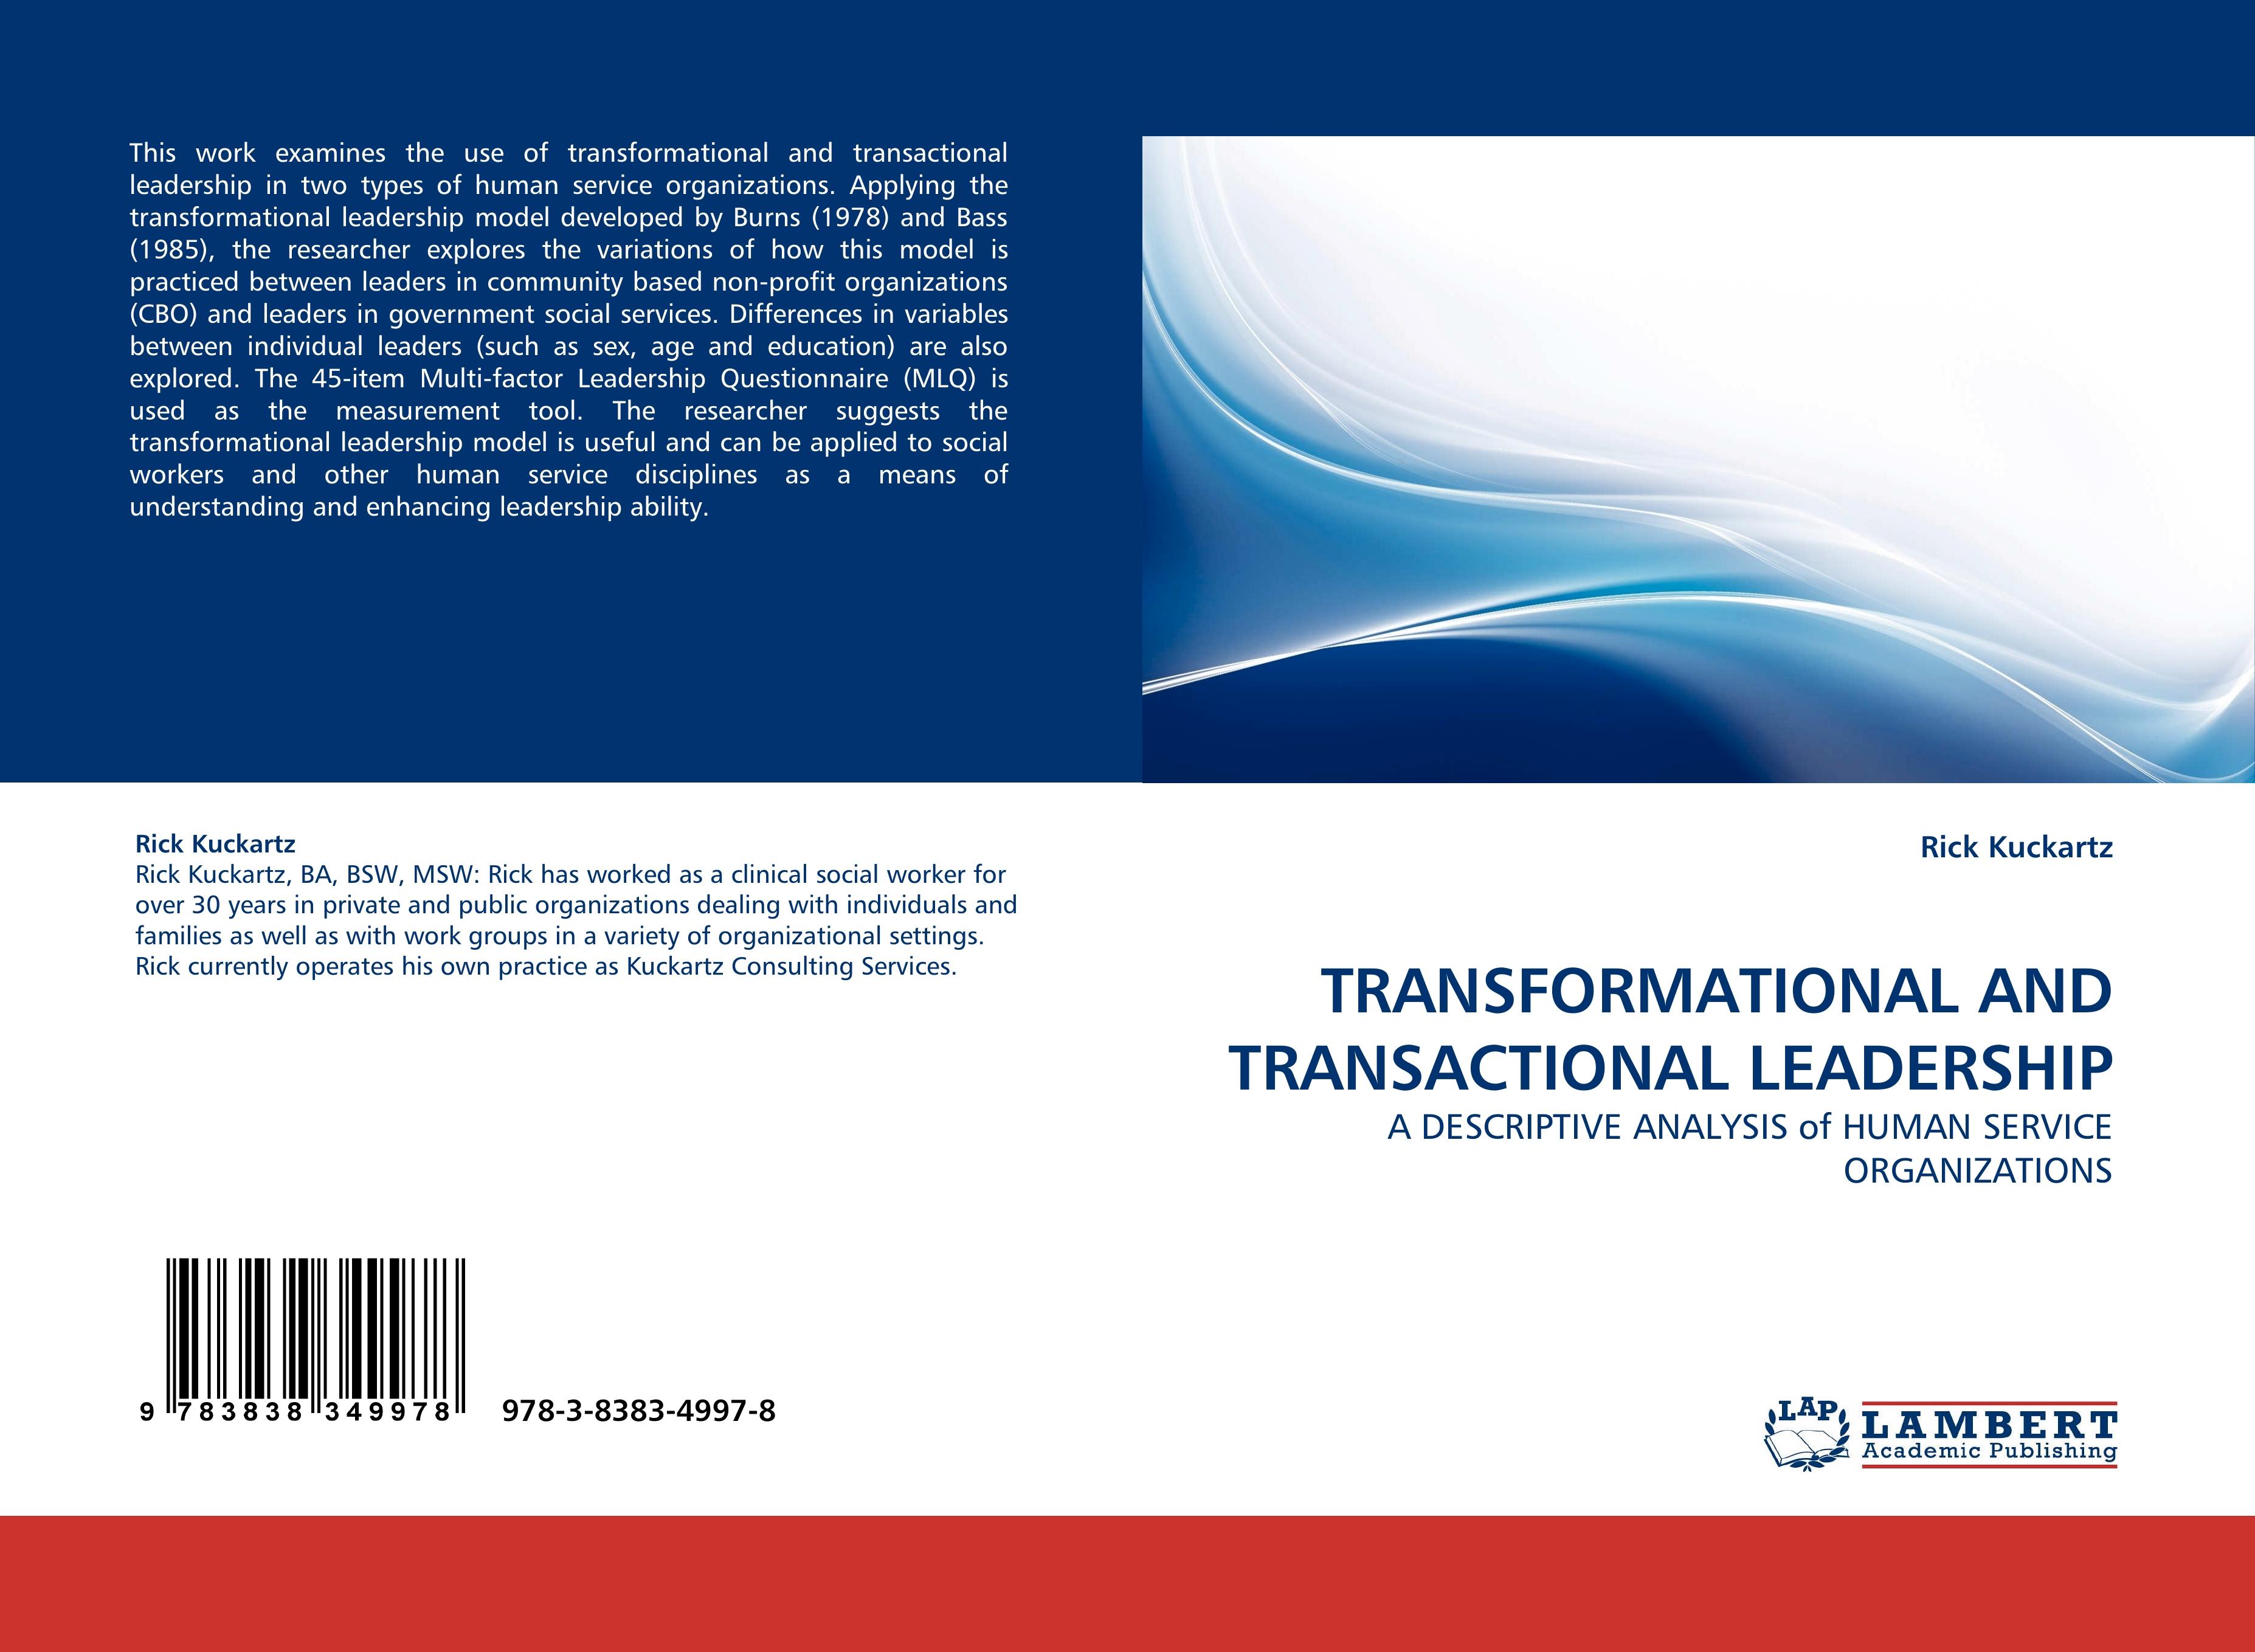 TRANSFORMATIONAL AND TRANSACTIONAL LEADERSHIP - Rick Kuckartz